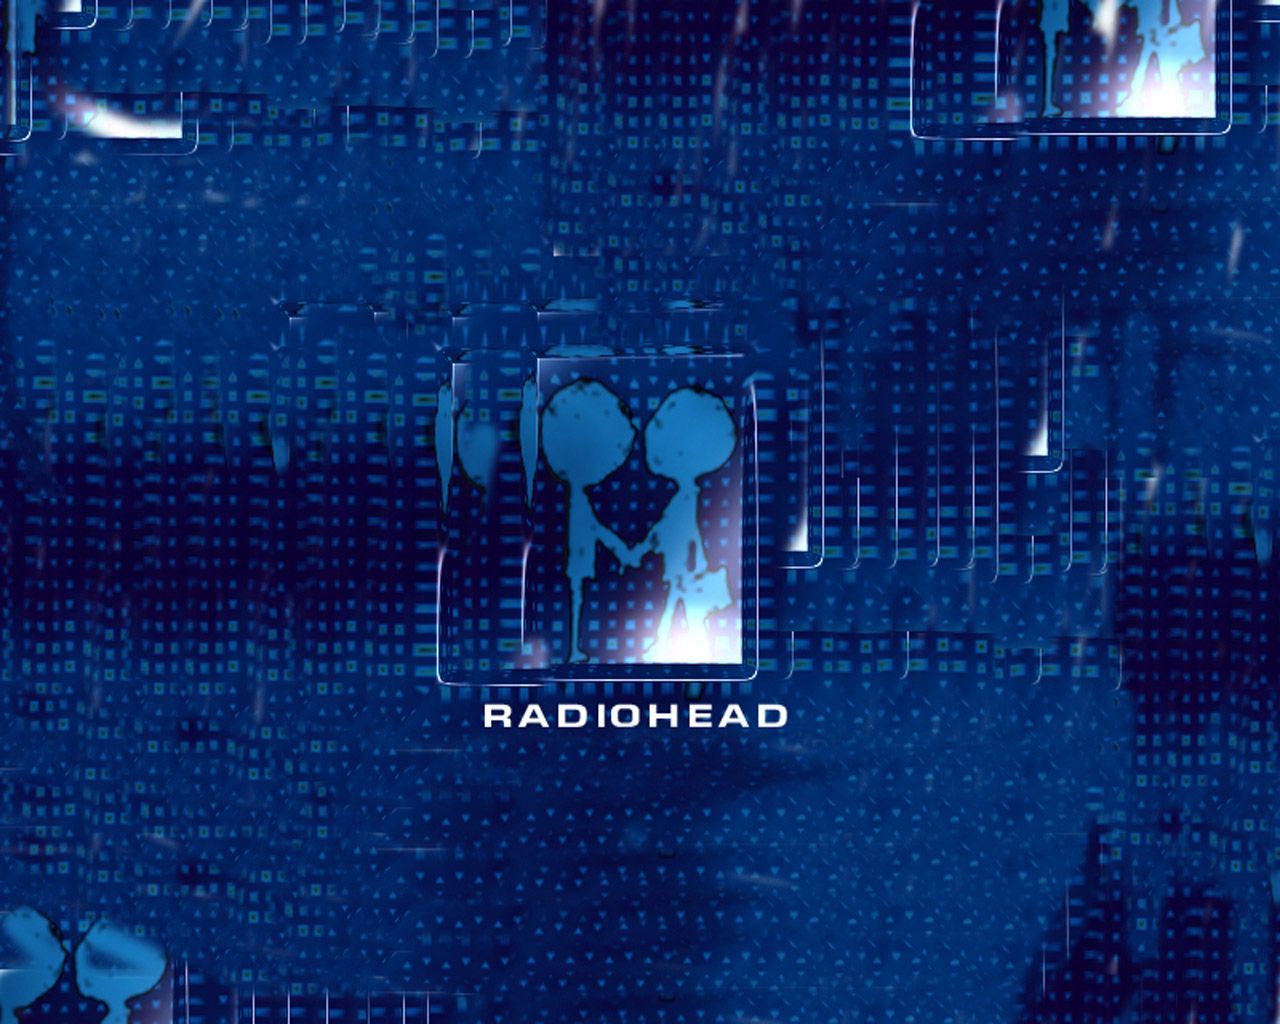 Radiohead - BANDSWALLPAPERS | free wallpapers, music wallpaper ...